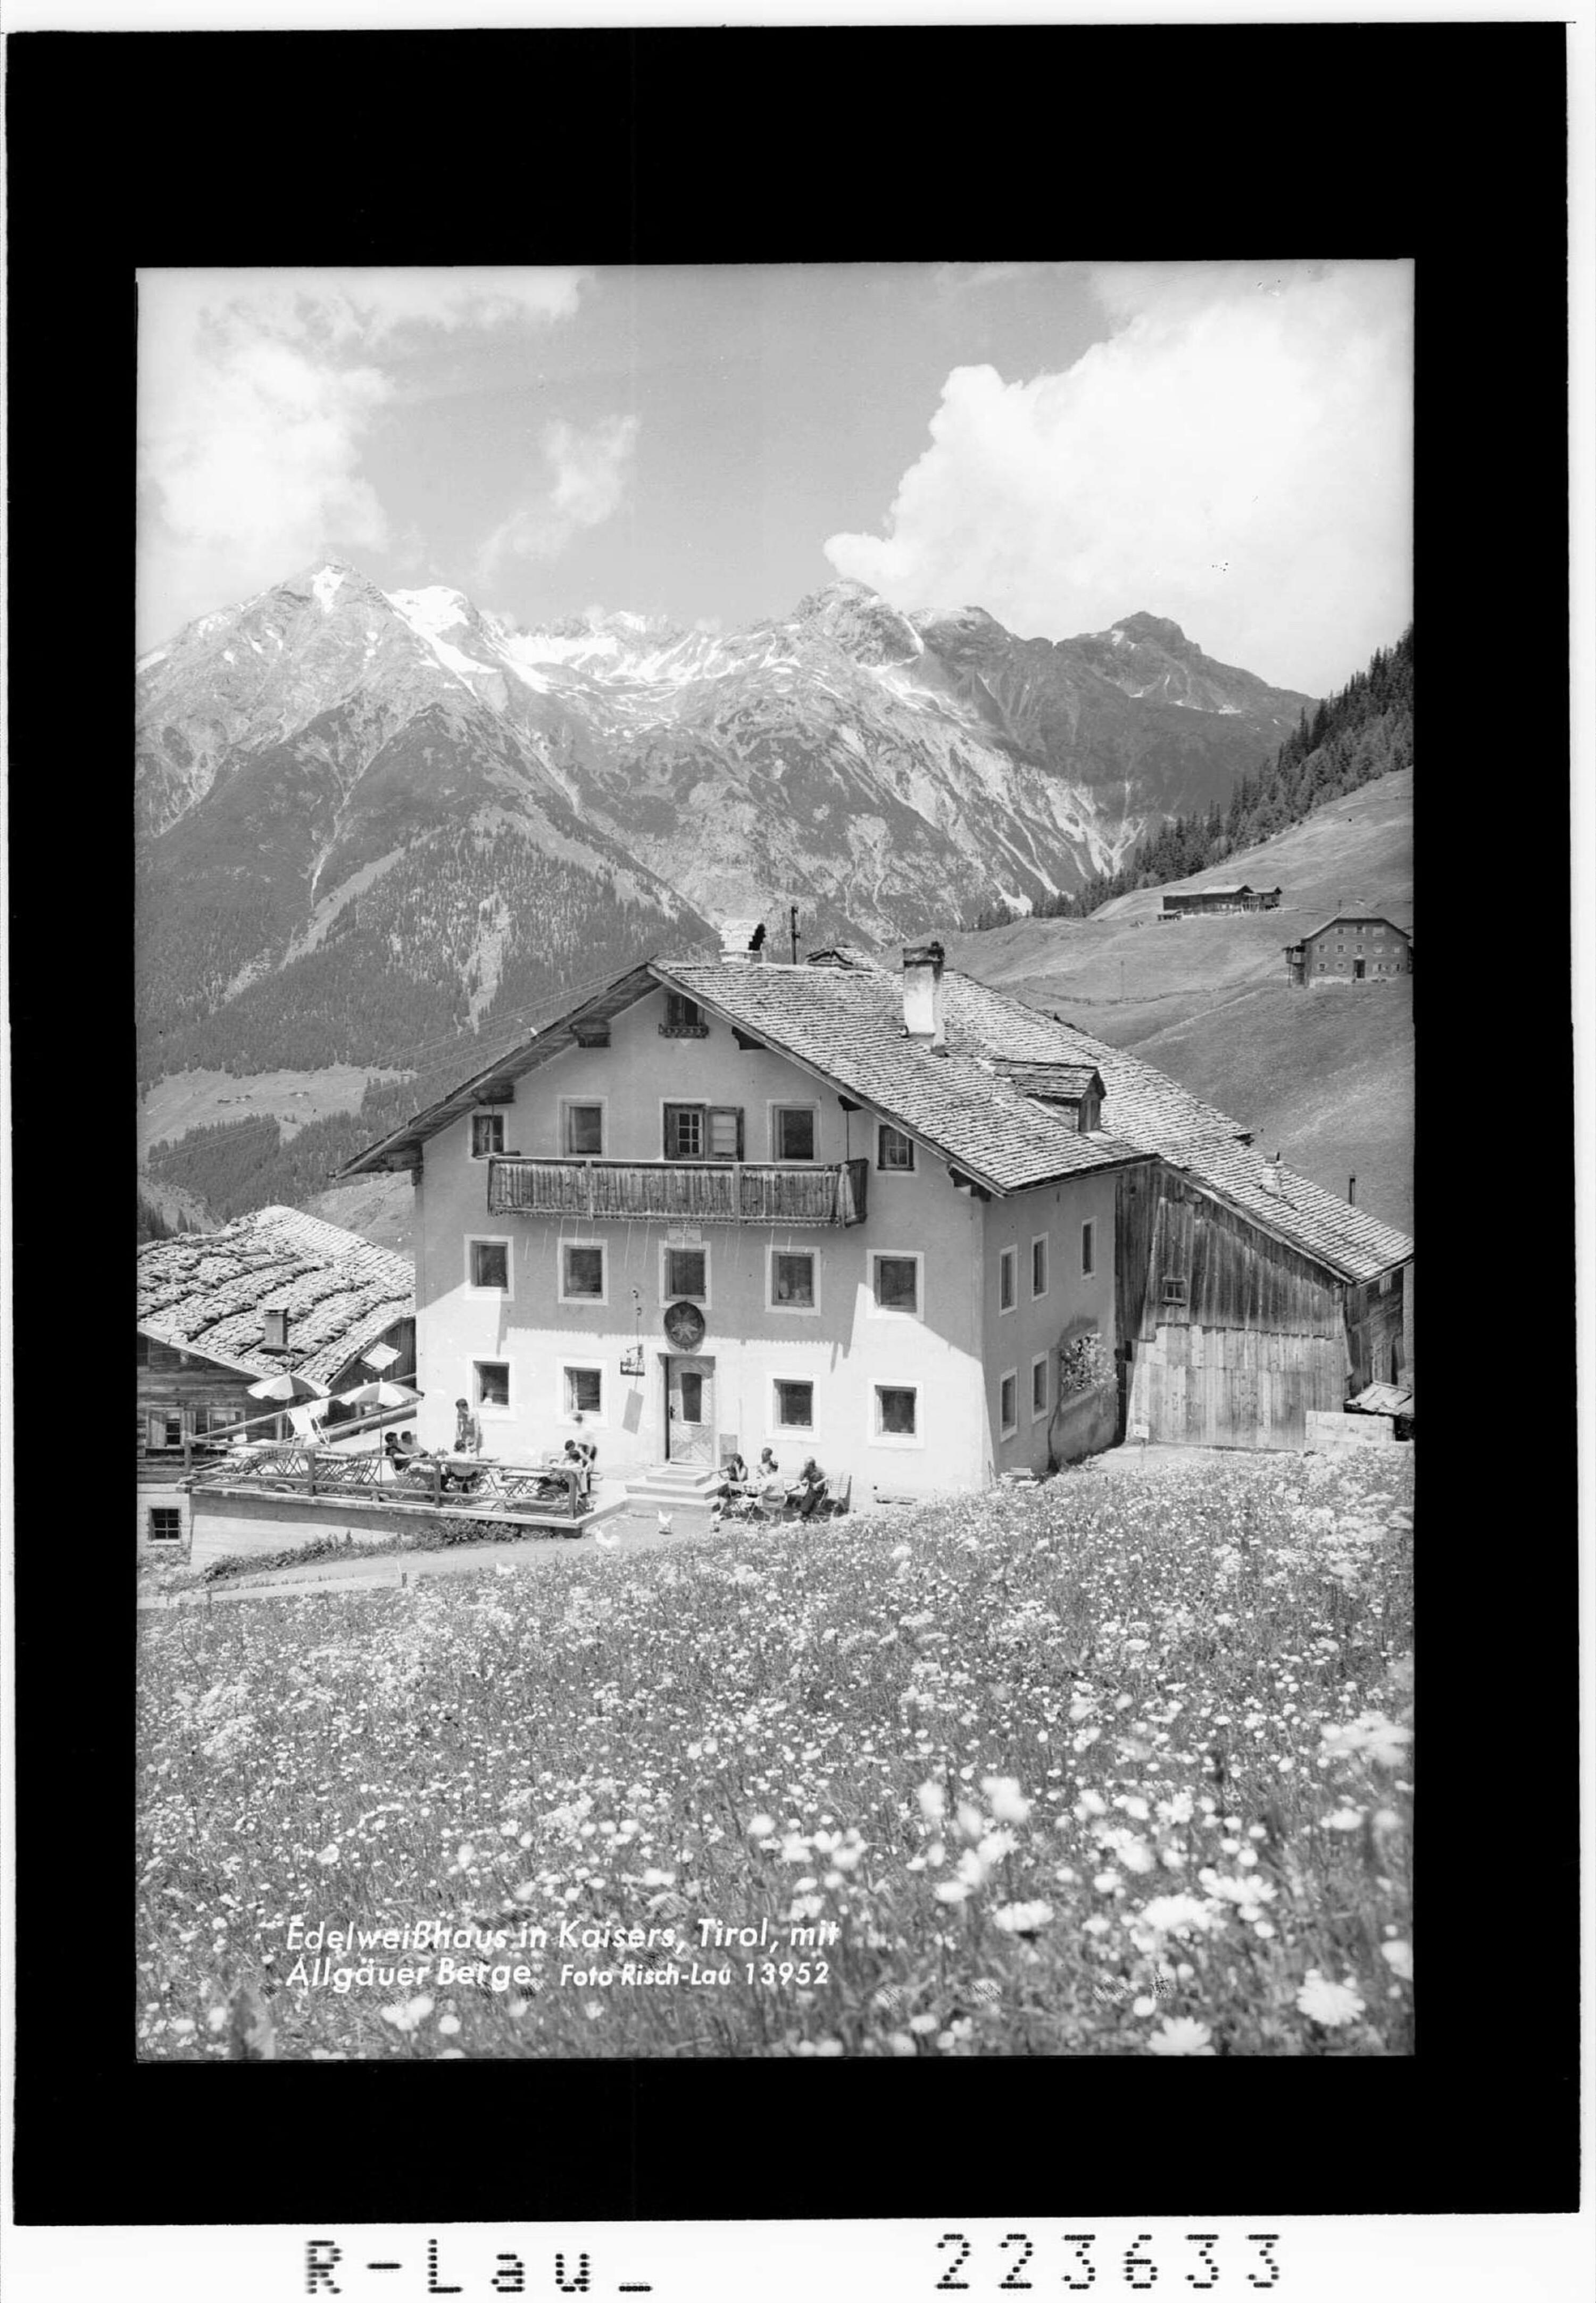 Edelweisshaus in Kaisers / Tirol / mit Allgäuer Berge></div>


    <hr>
    <div class=